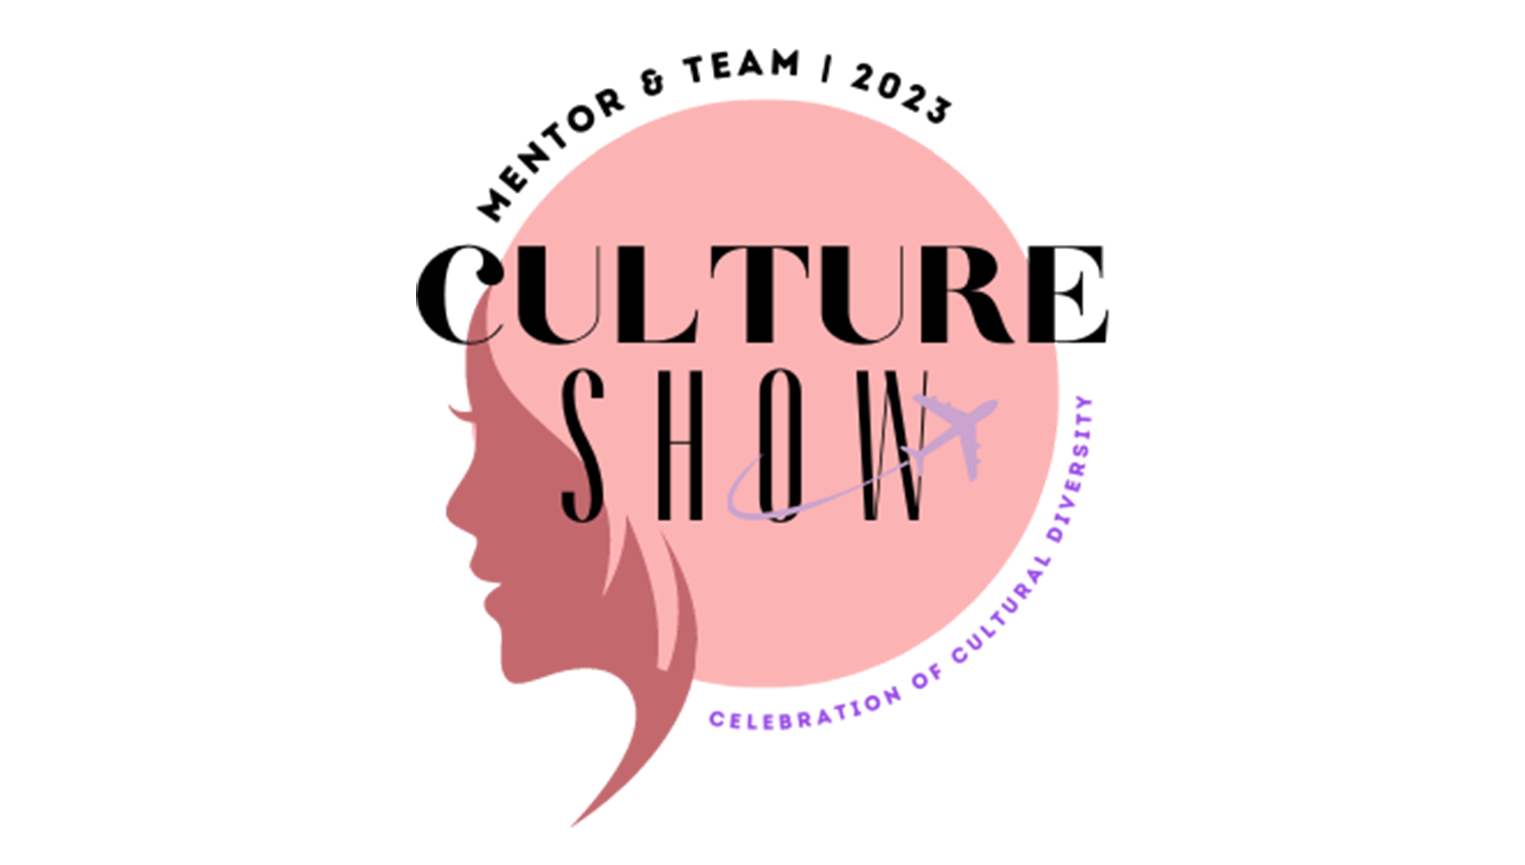 Culture Show - February 15: Watch Promo Video!